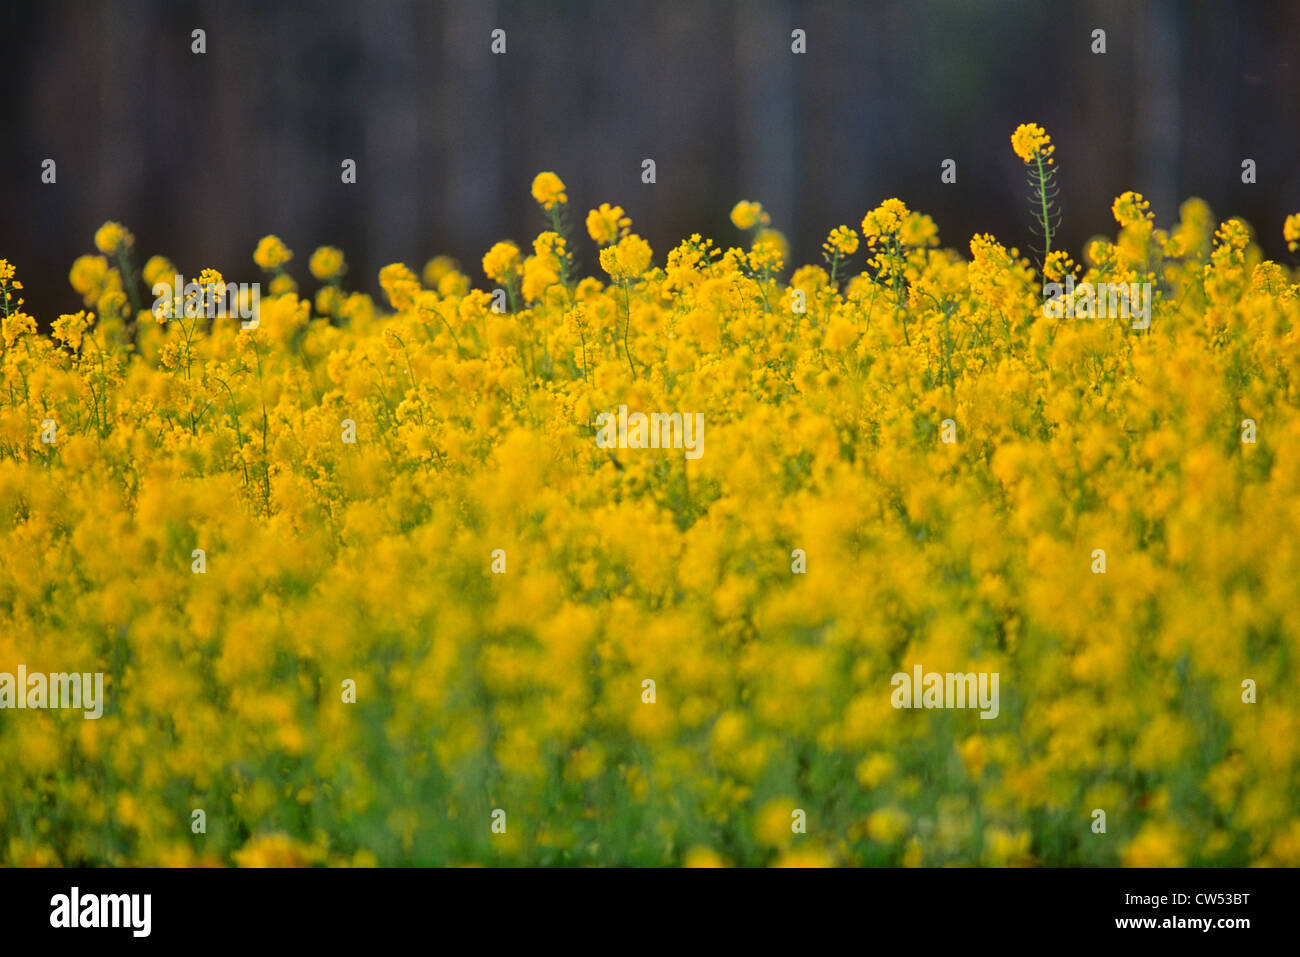 Kanada, Alberta, gelbe Blume auf Raps (Brassica Campestris) Feld Stockfoto